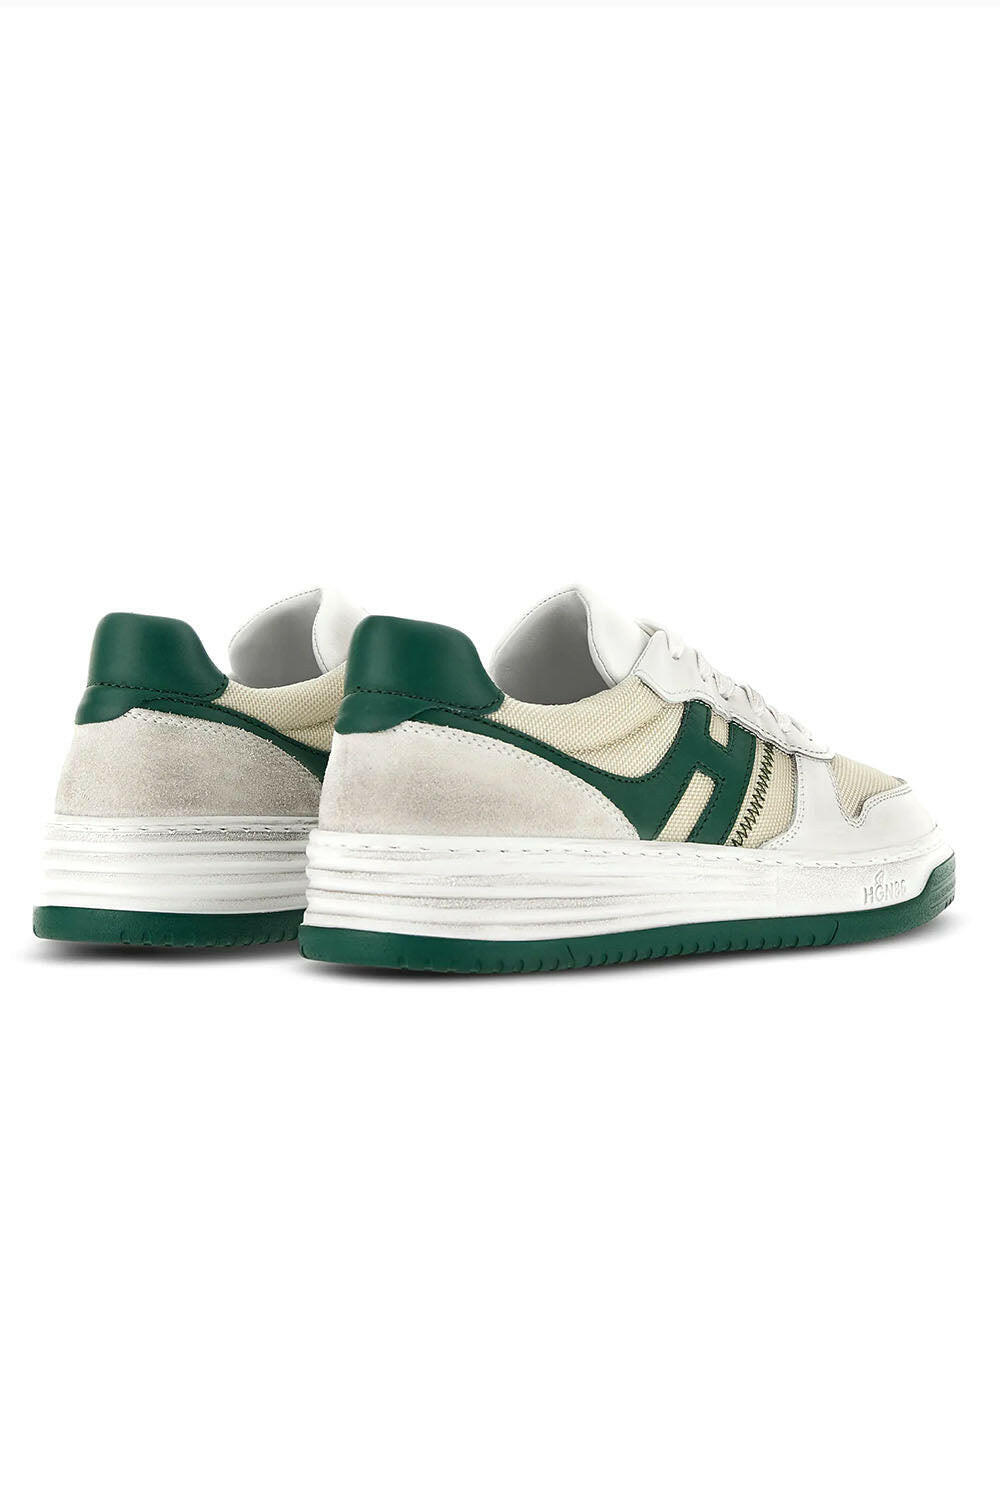  Hogan Sneakers H630 Verde Uomo - 3